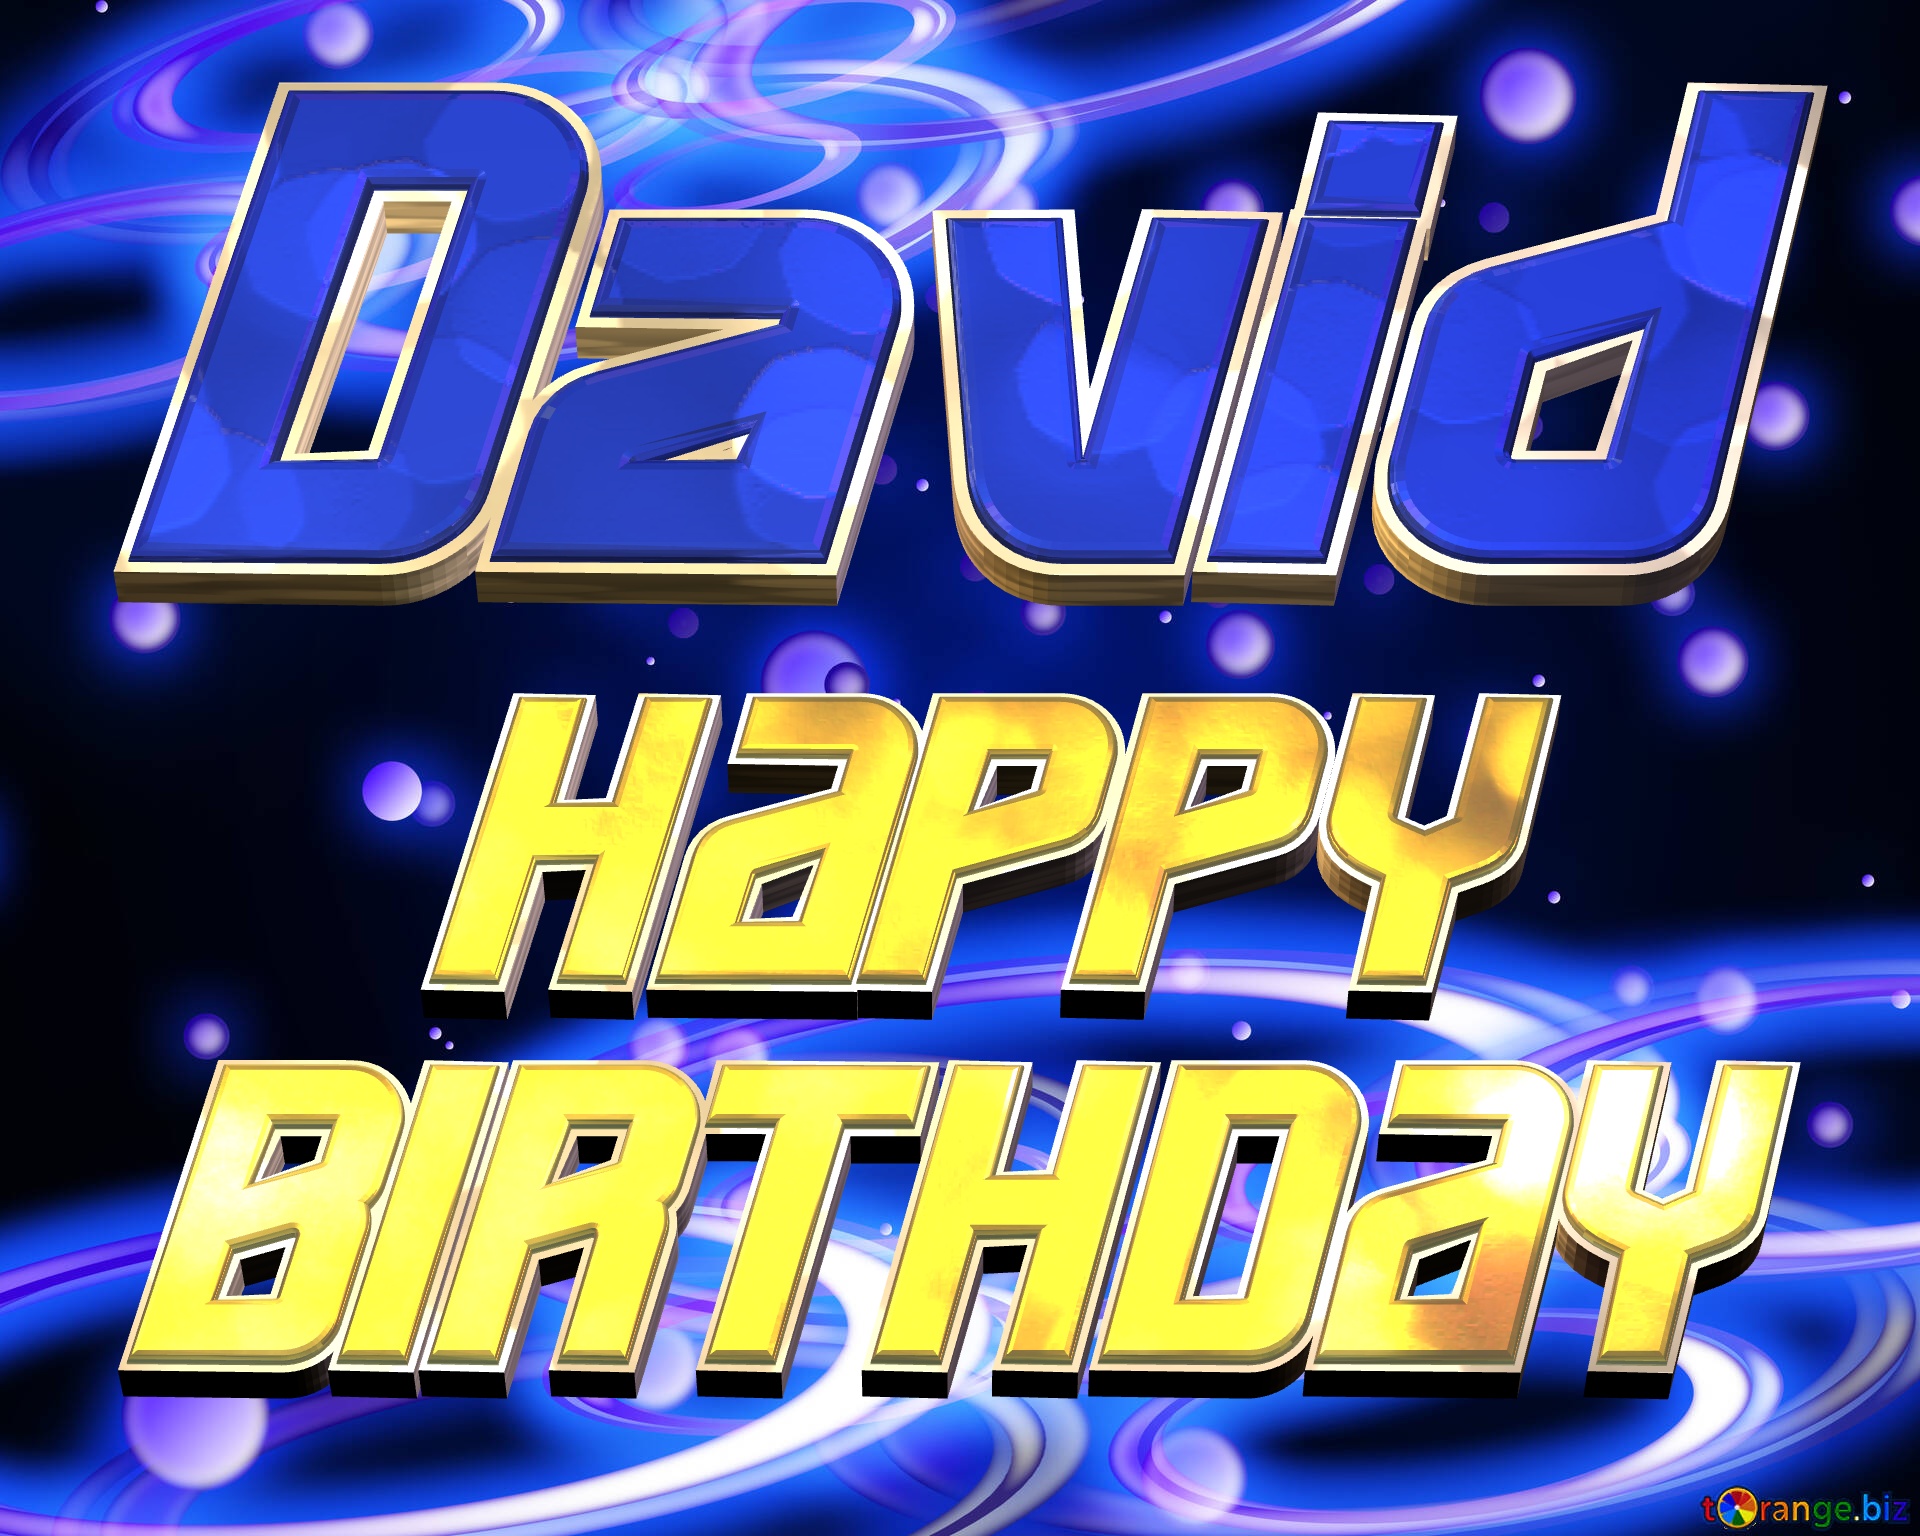 David Space Happy Birthday! Technology background №54919